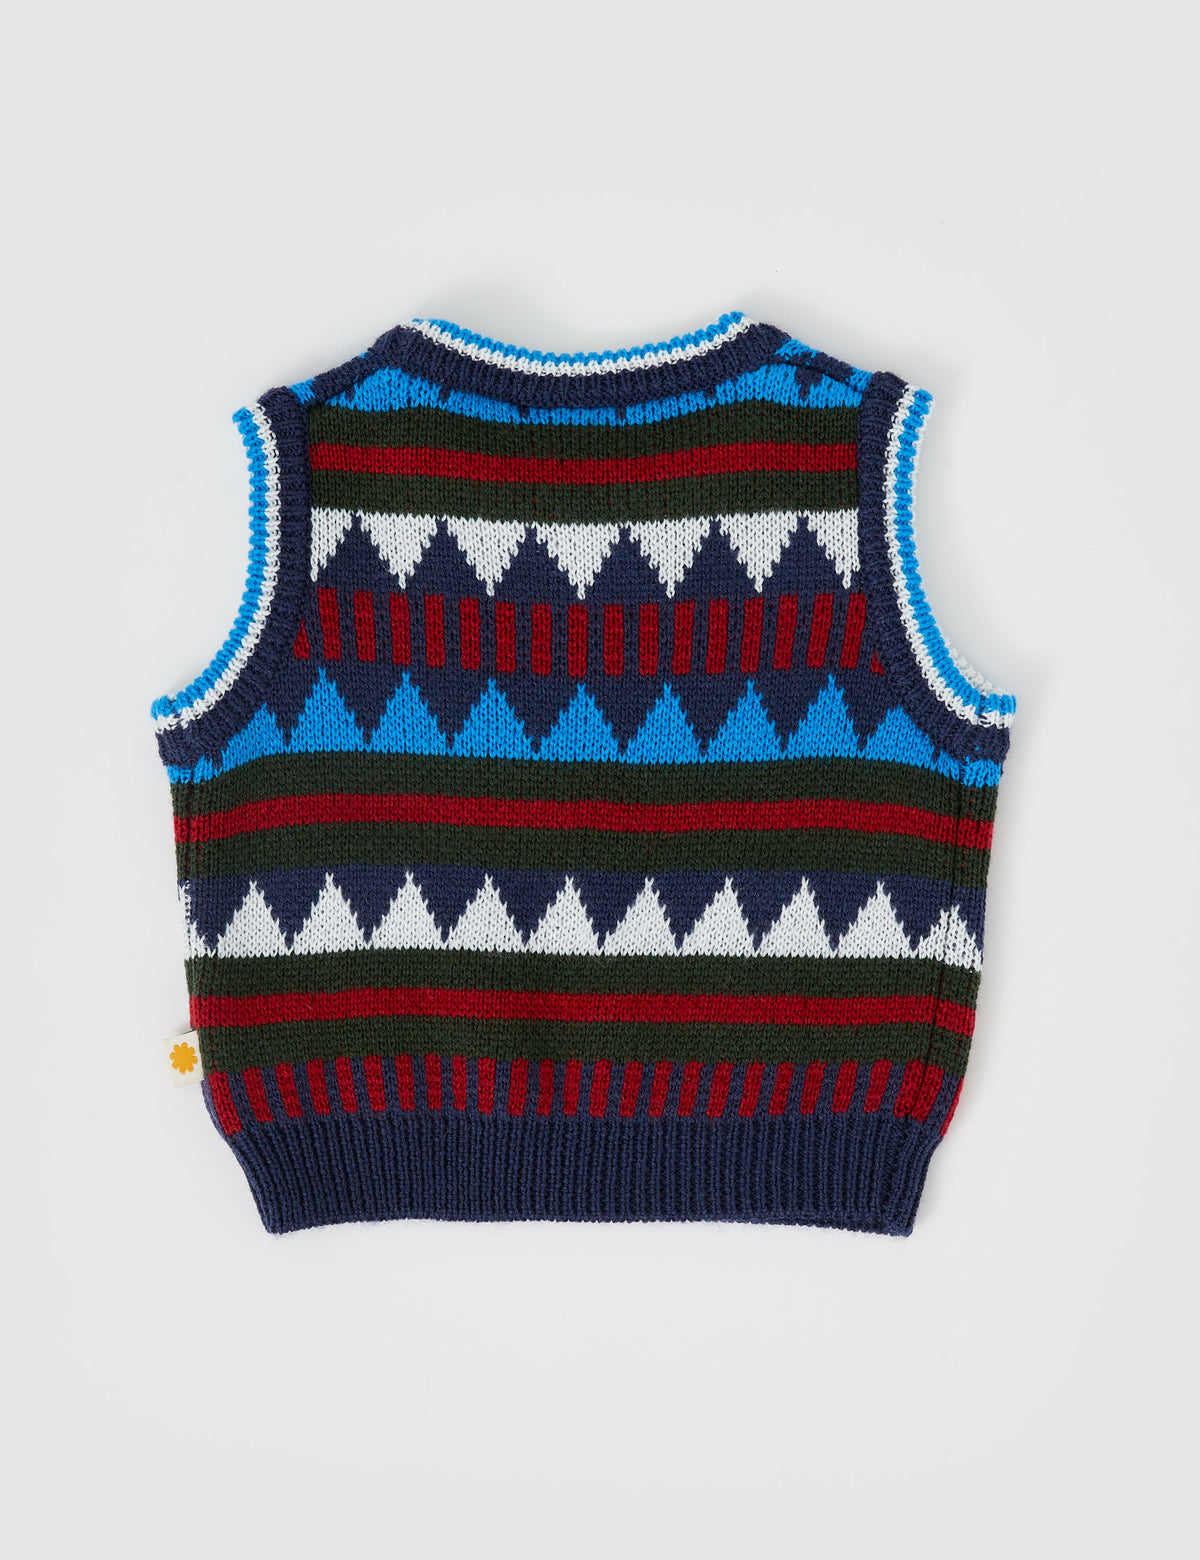 Darcy Sweater Vest - Navy Multi - Child Boutique